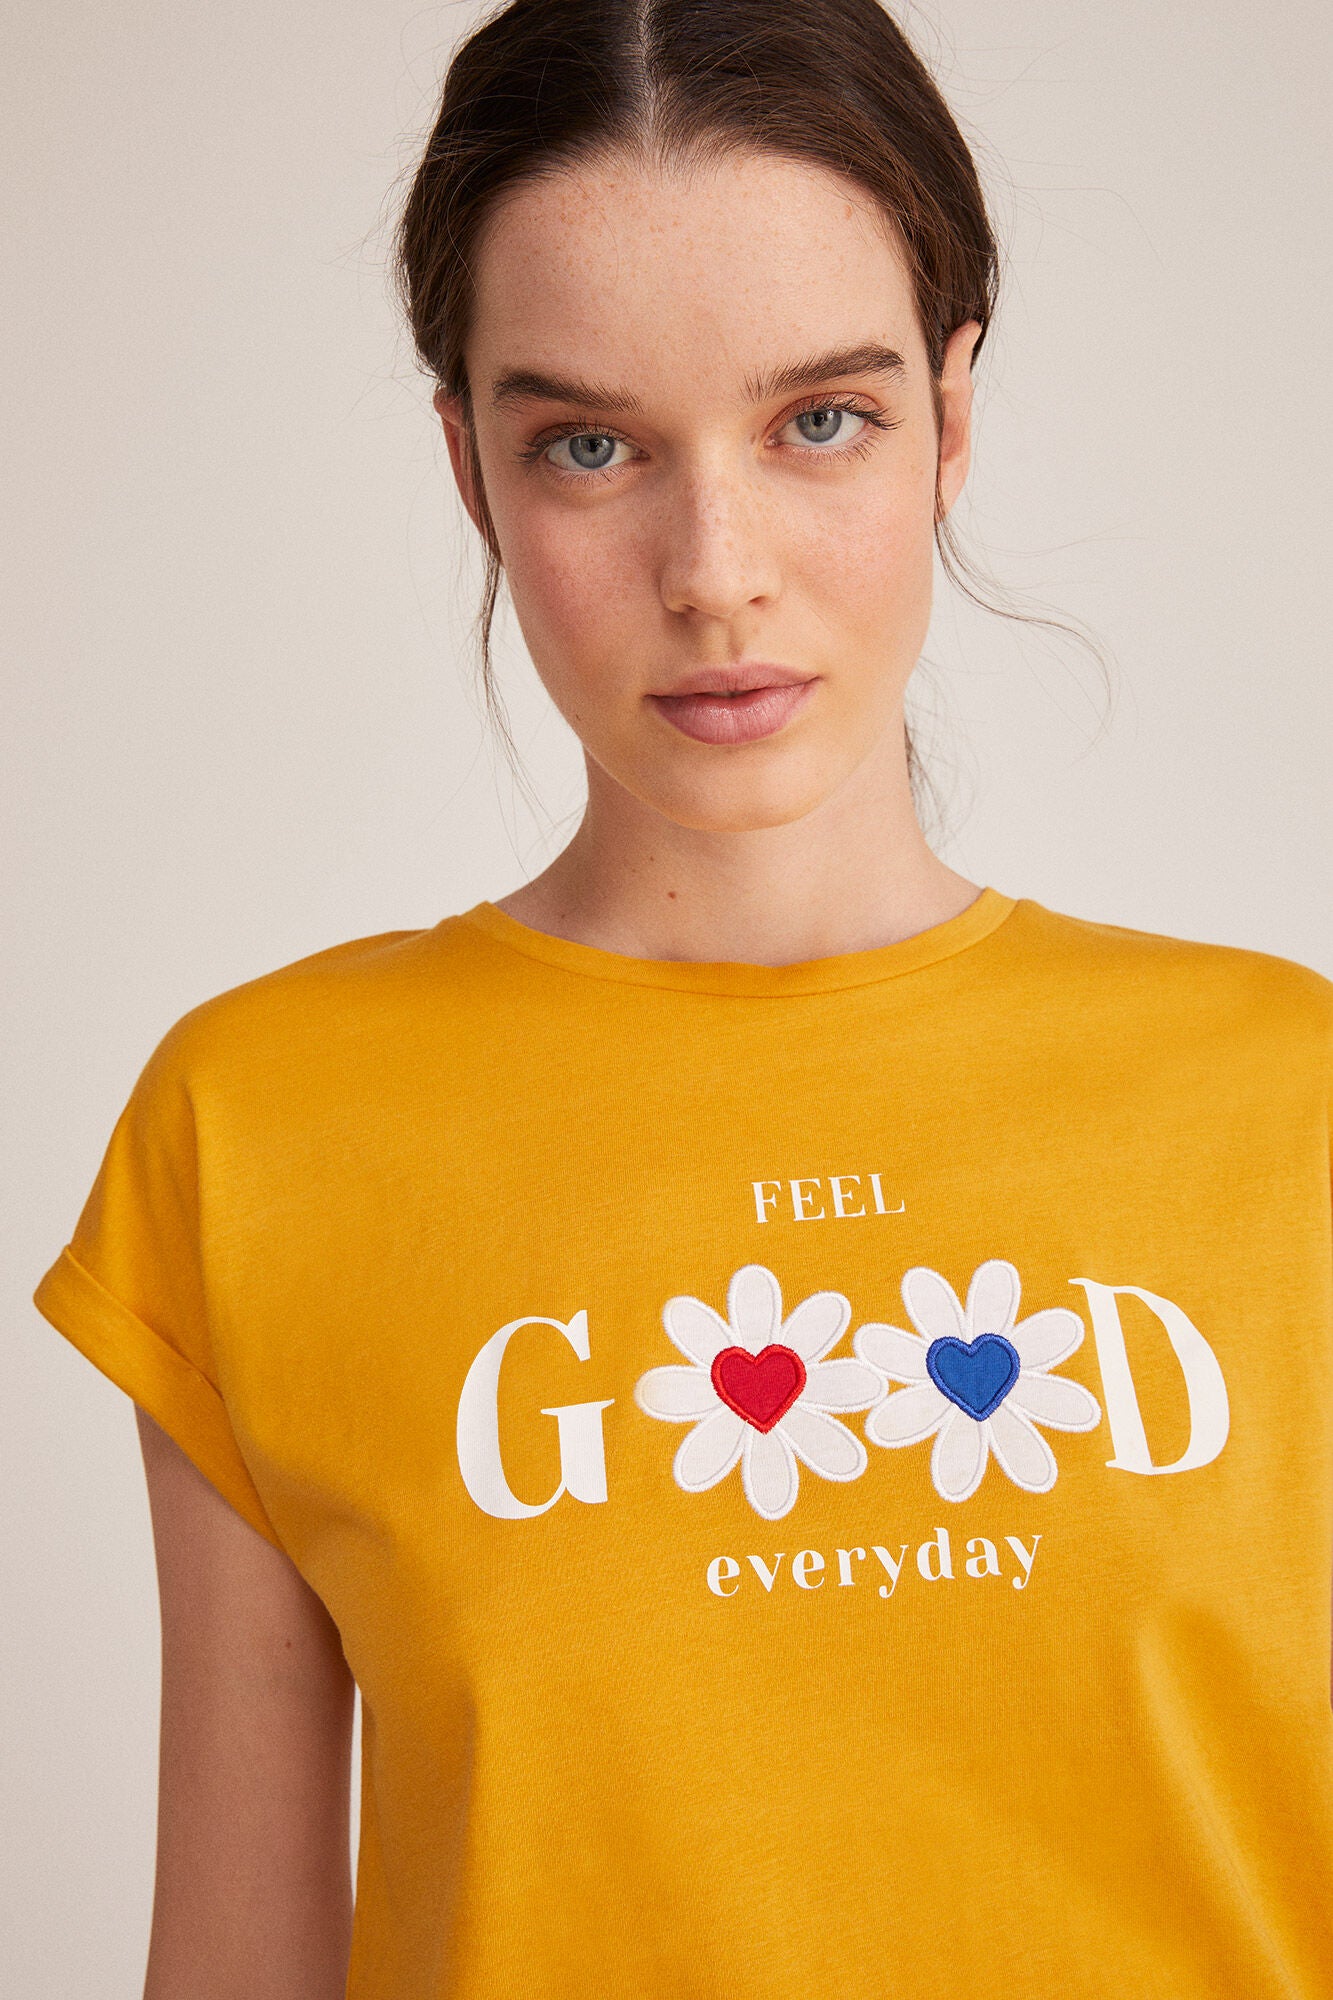 "Feel good everyday" T-shirt